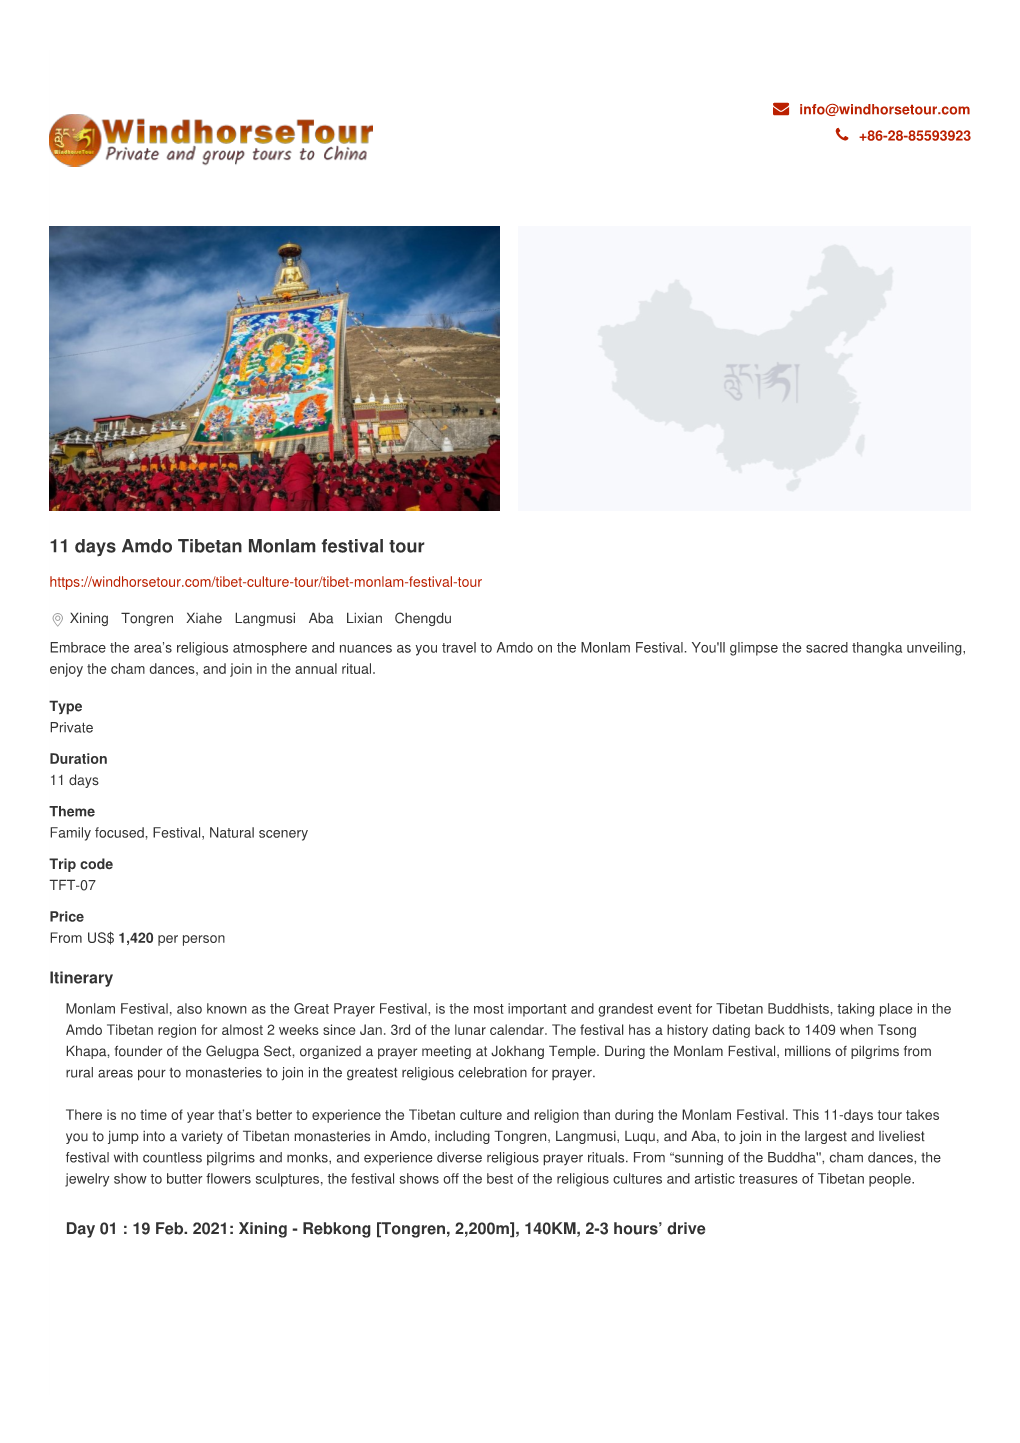 11 Days Amdo Tibetan Monlam Festival Tour